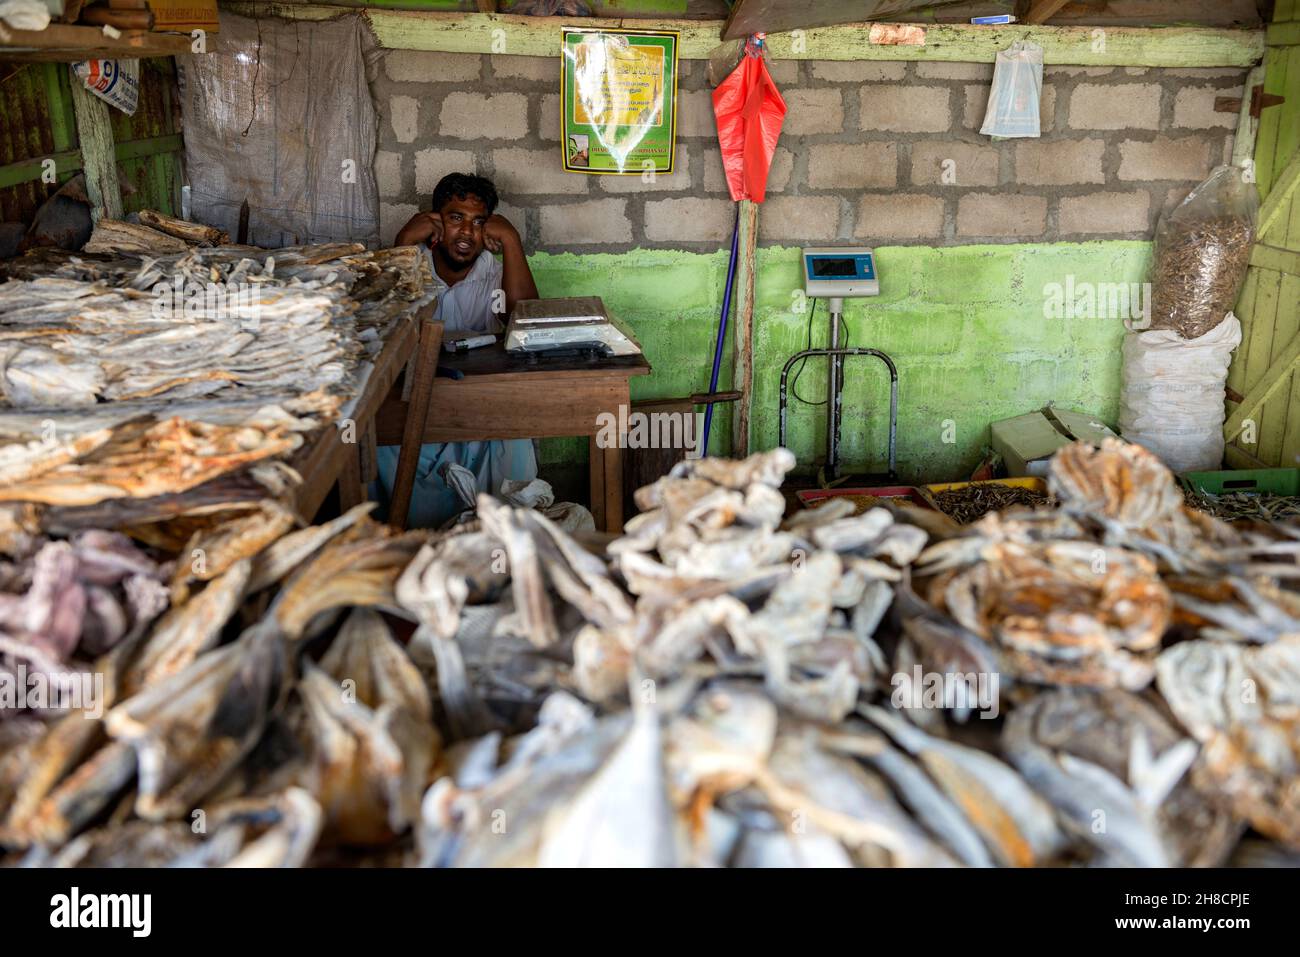 Sri Lanka, Northern Province, Province du Nord, Nördliche Provinz, Mannar, port, Hafen, Harbour, vendeur de poisson, Fischhändler, fish seller Stock Photo